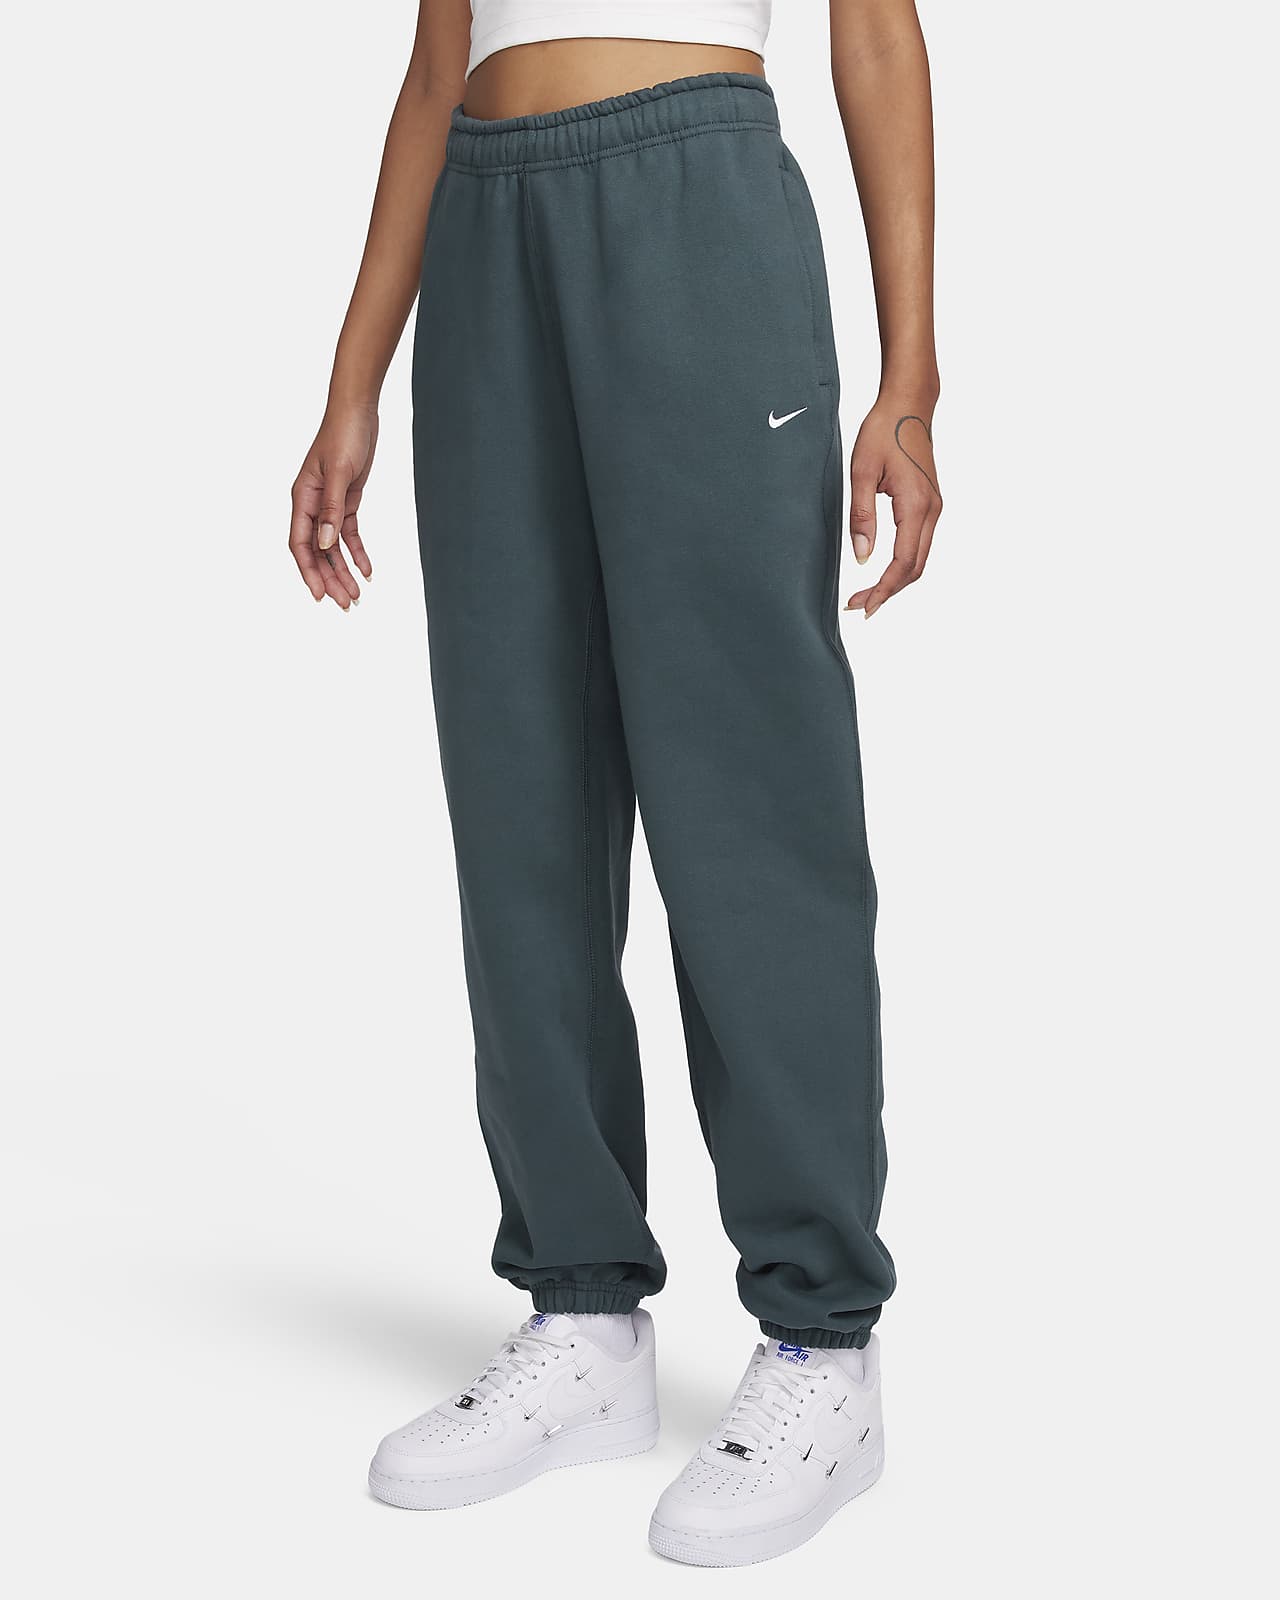 Nike Revival wide leg sweatpants in cream - ShopStyle Activewear Pants